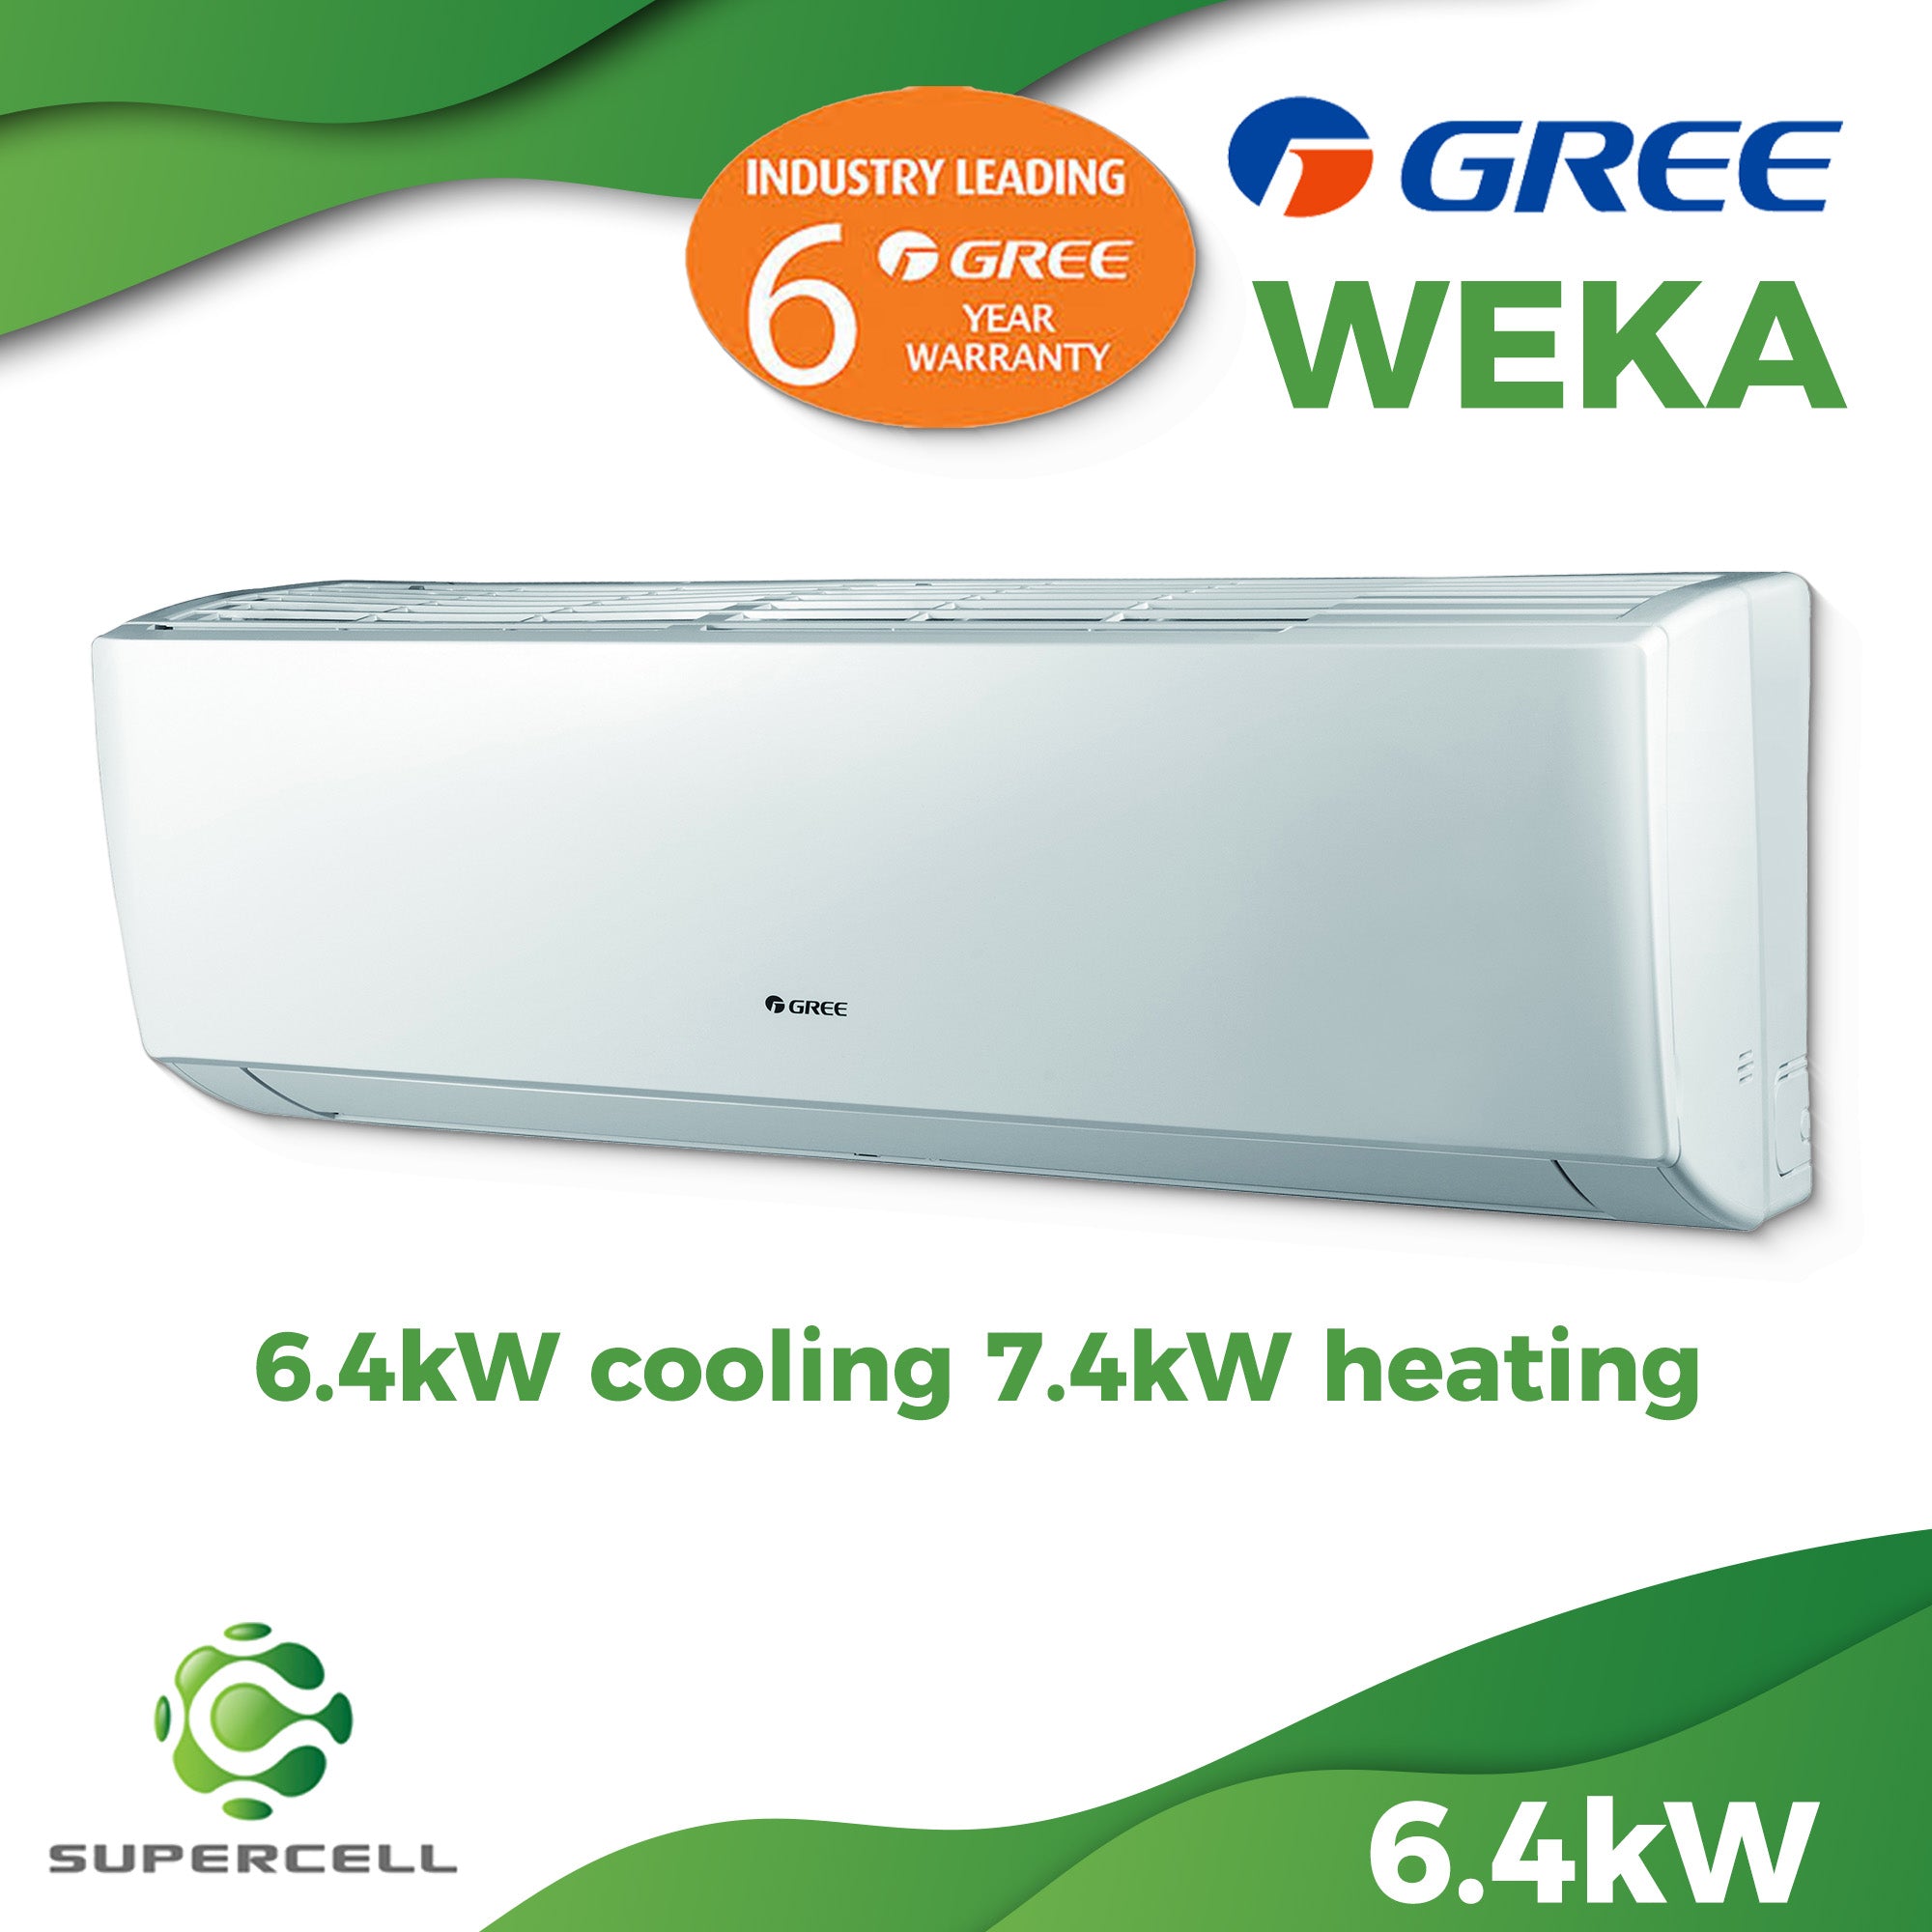 Gree WEKA Heat Pump 6.4kW Cooling 7.4kW Heating - supercellnz